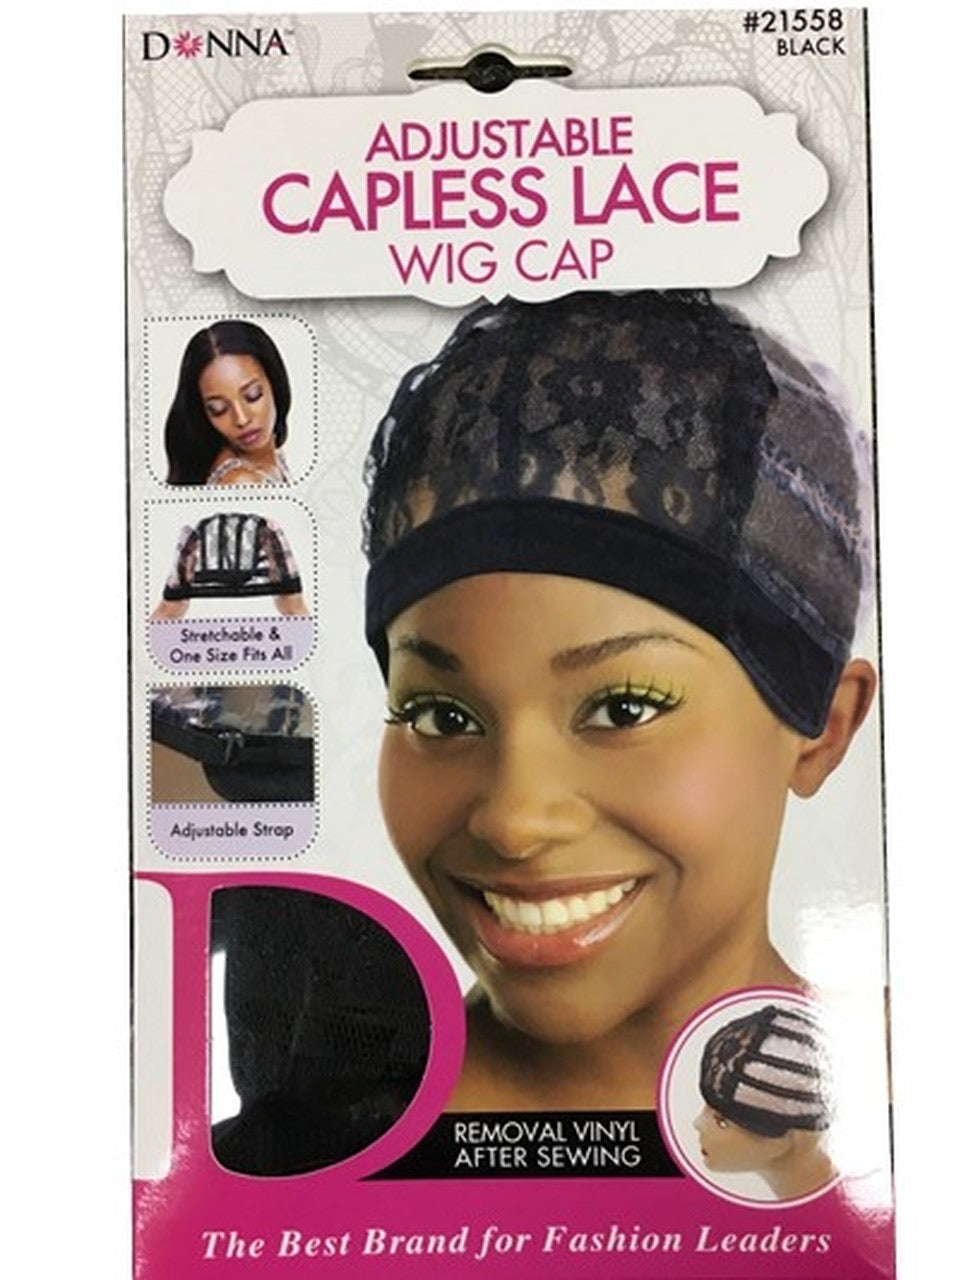 Donna adjustable capless lace wig cap